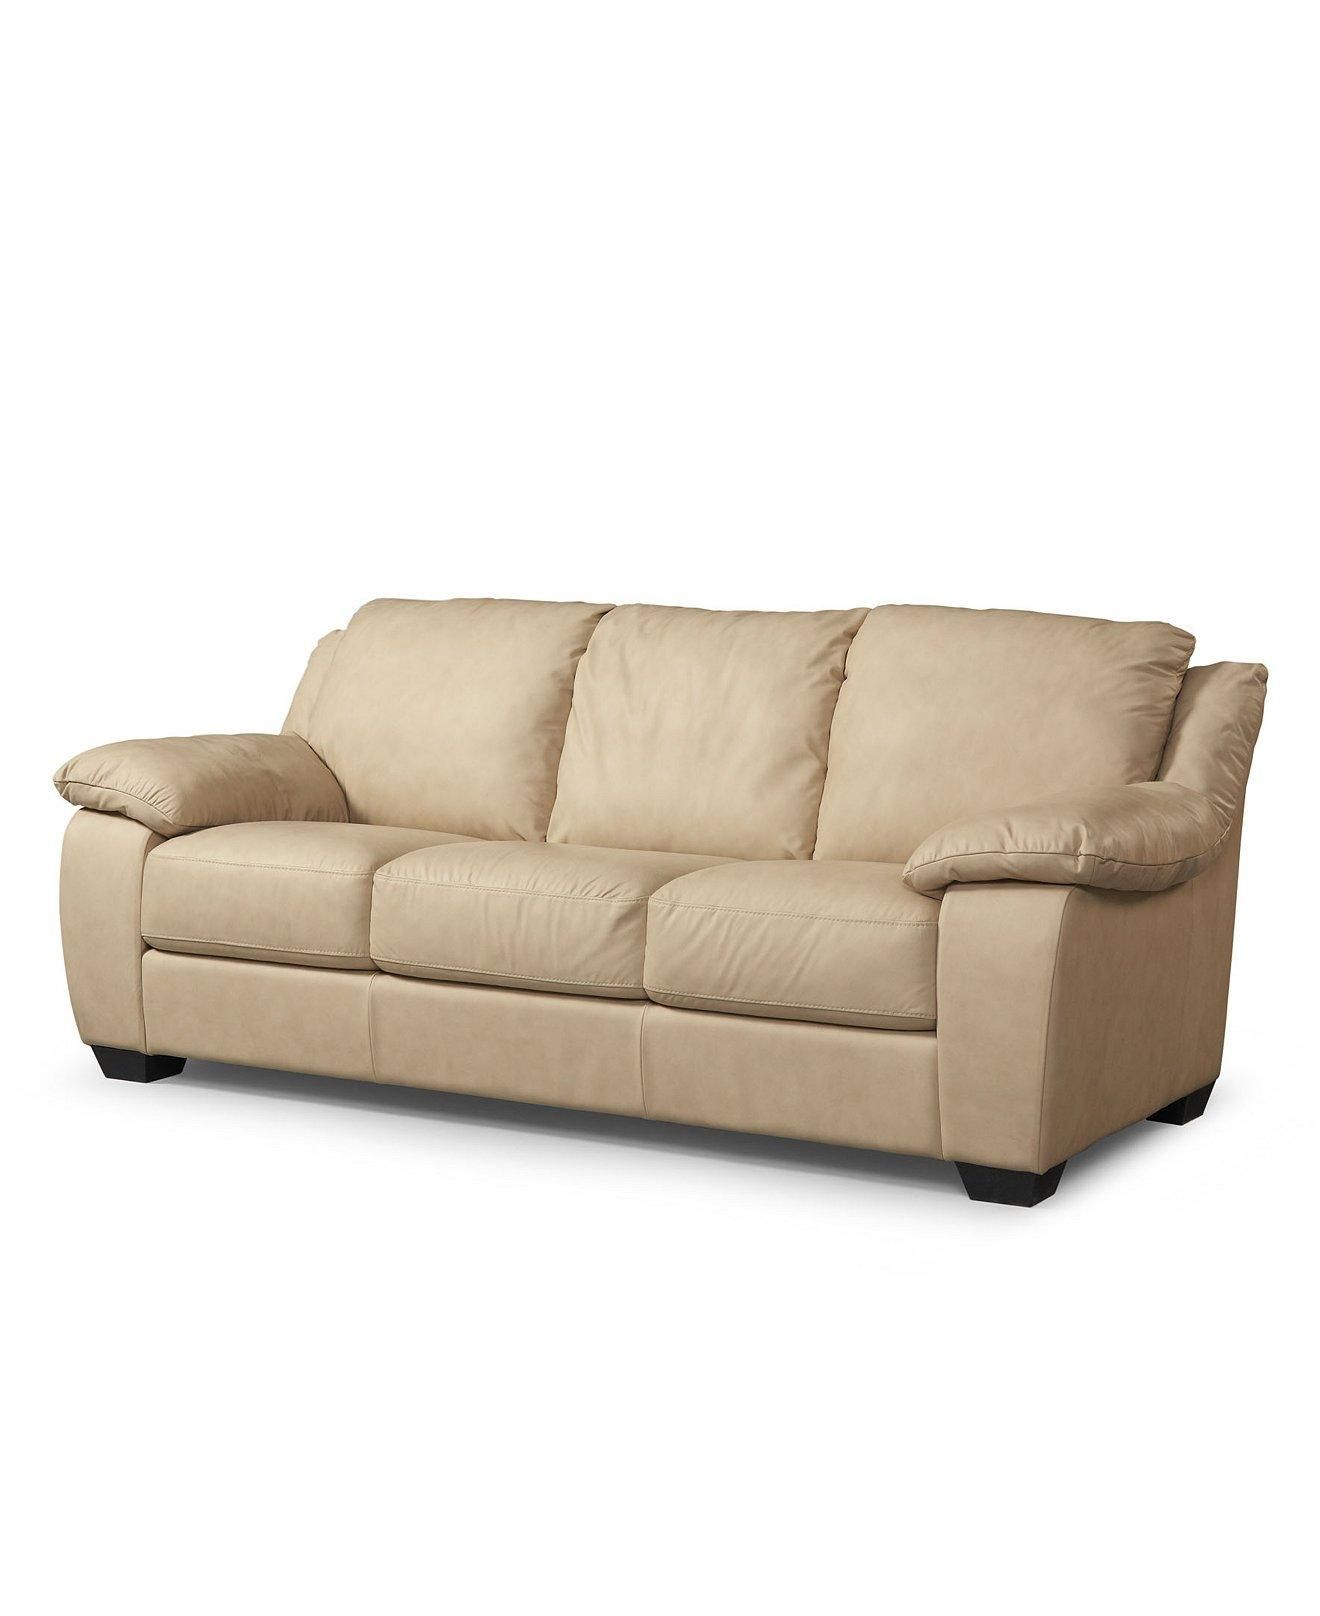 Blair Leather Sofa With Ideas Photo 12901 | Kengire With Regard To Blair Leather Sofas (View 2 of 20)